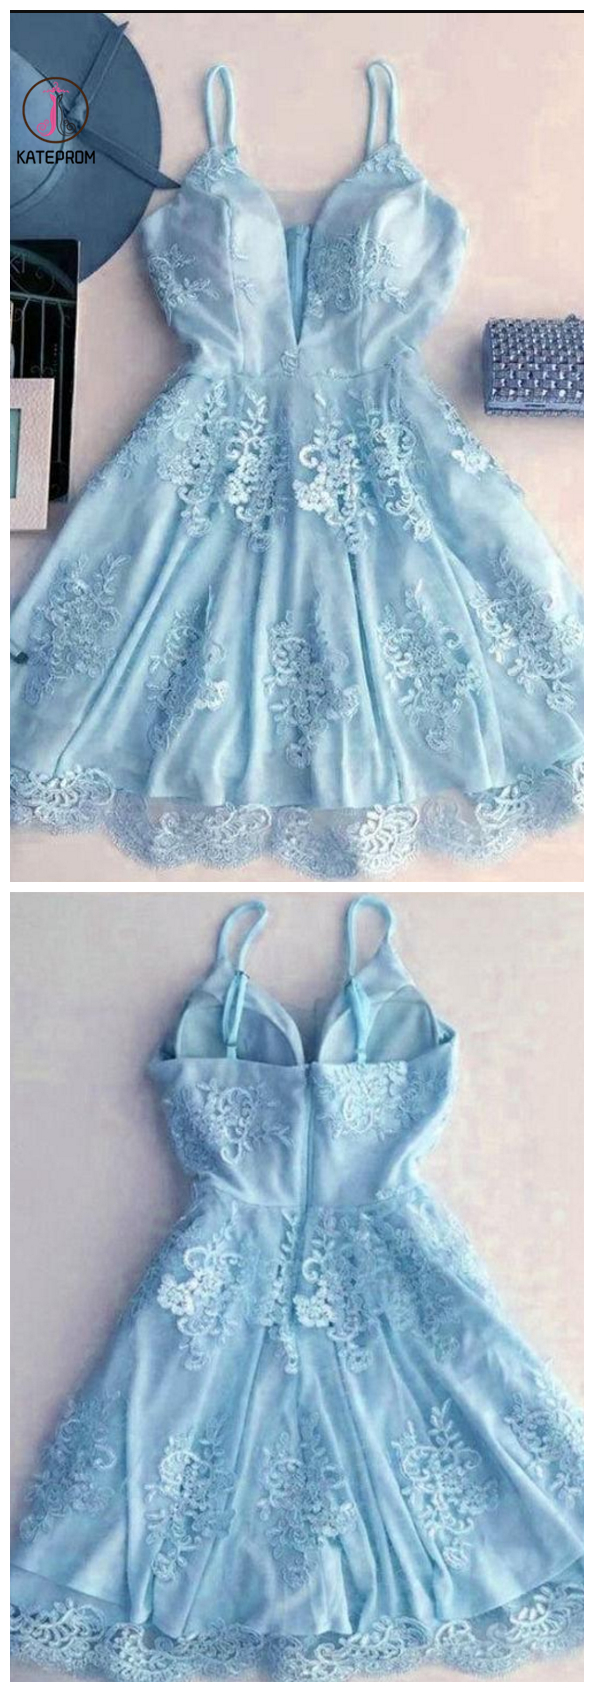 H3433 Light Blue Spaghetti Strap Homecoming Dress,lace Appliqued Short Homecoming Dresses, Sexy Mini Prom Dress